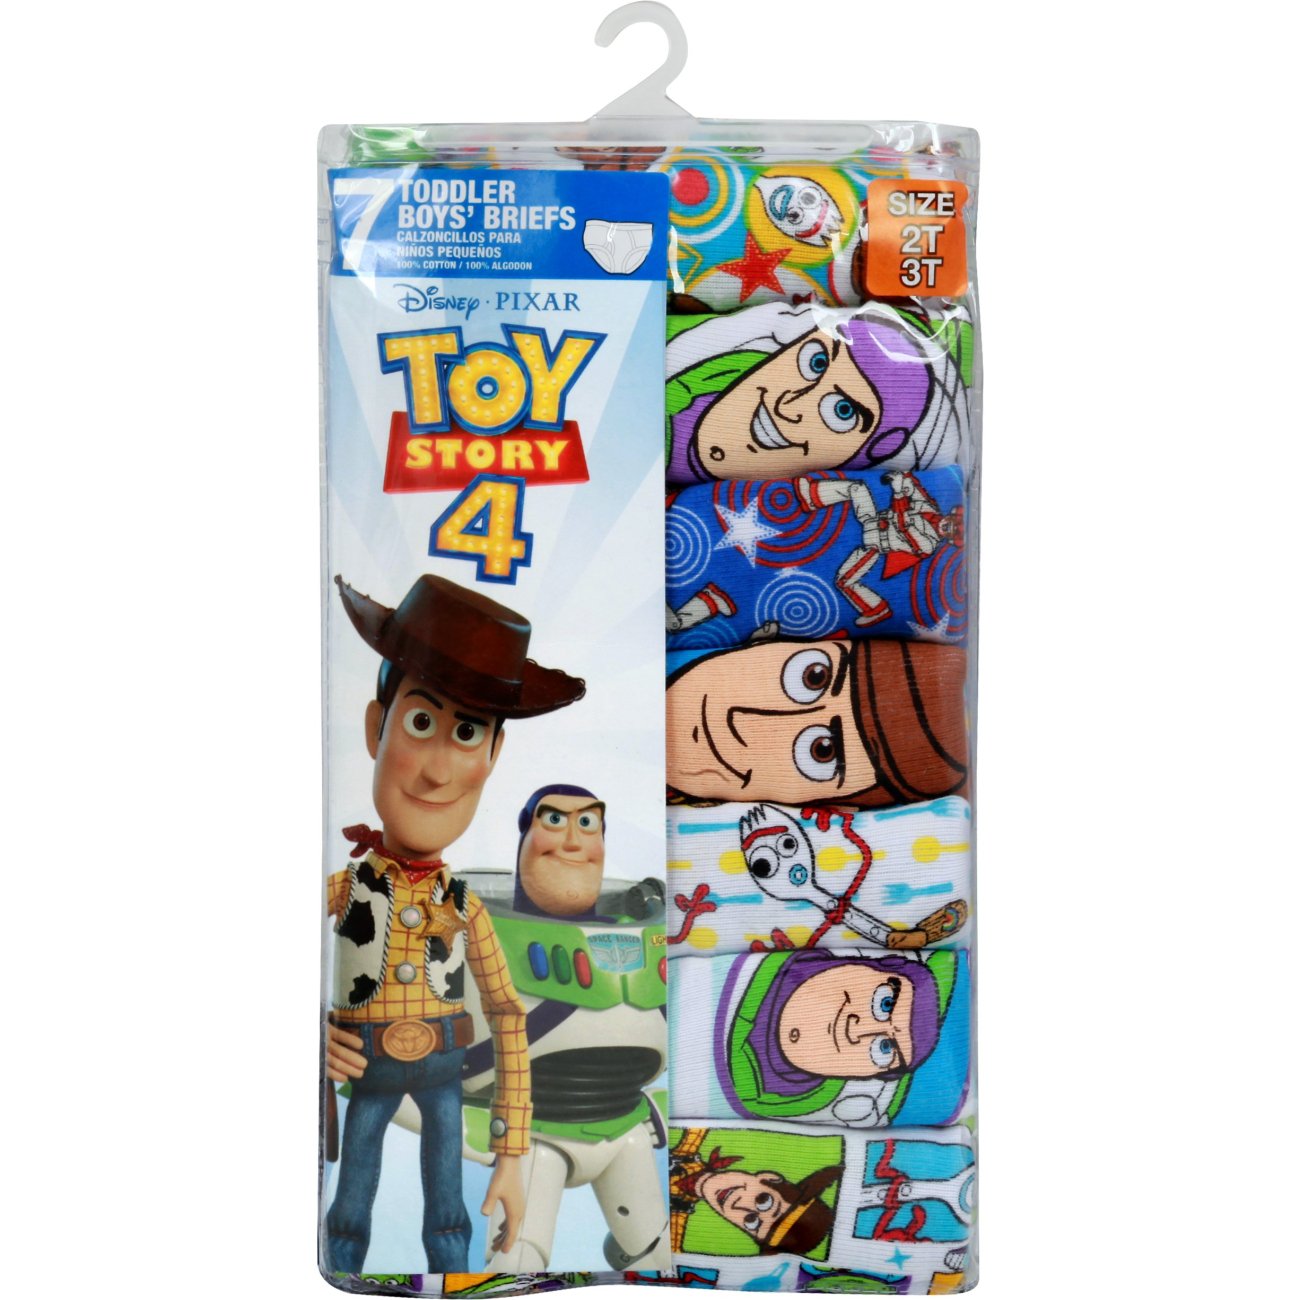 Handcraft Disney Pixar Toy Story 4 Toddler Boys' Day of the Week Briefs